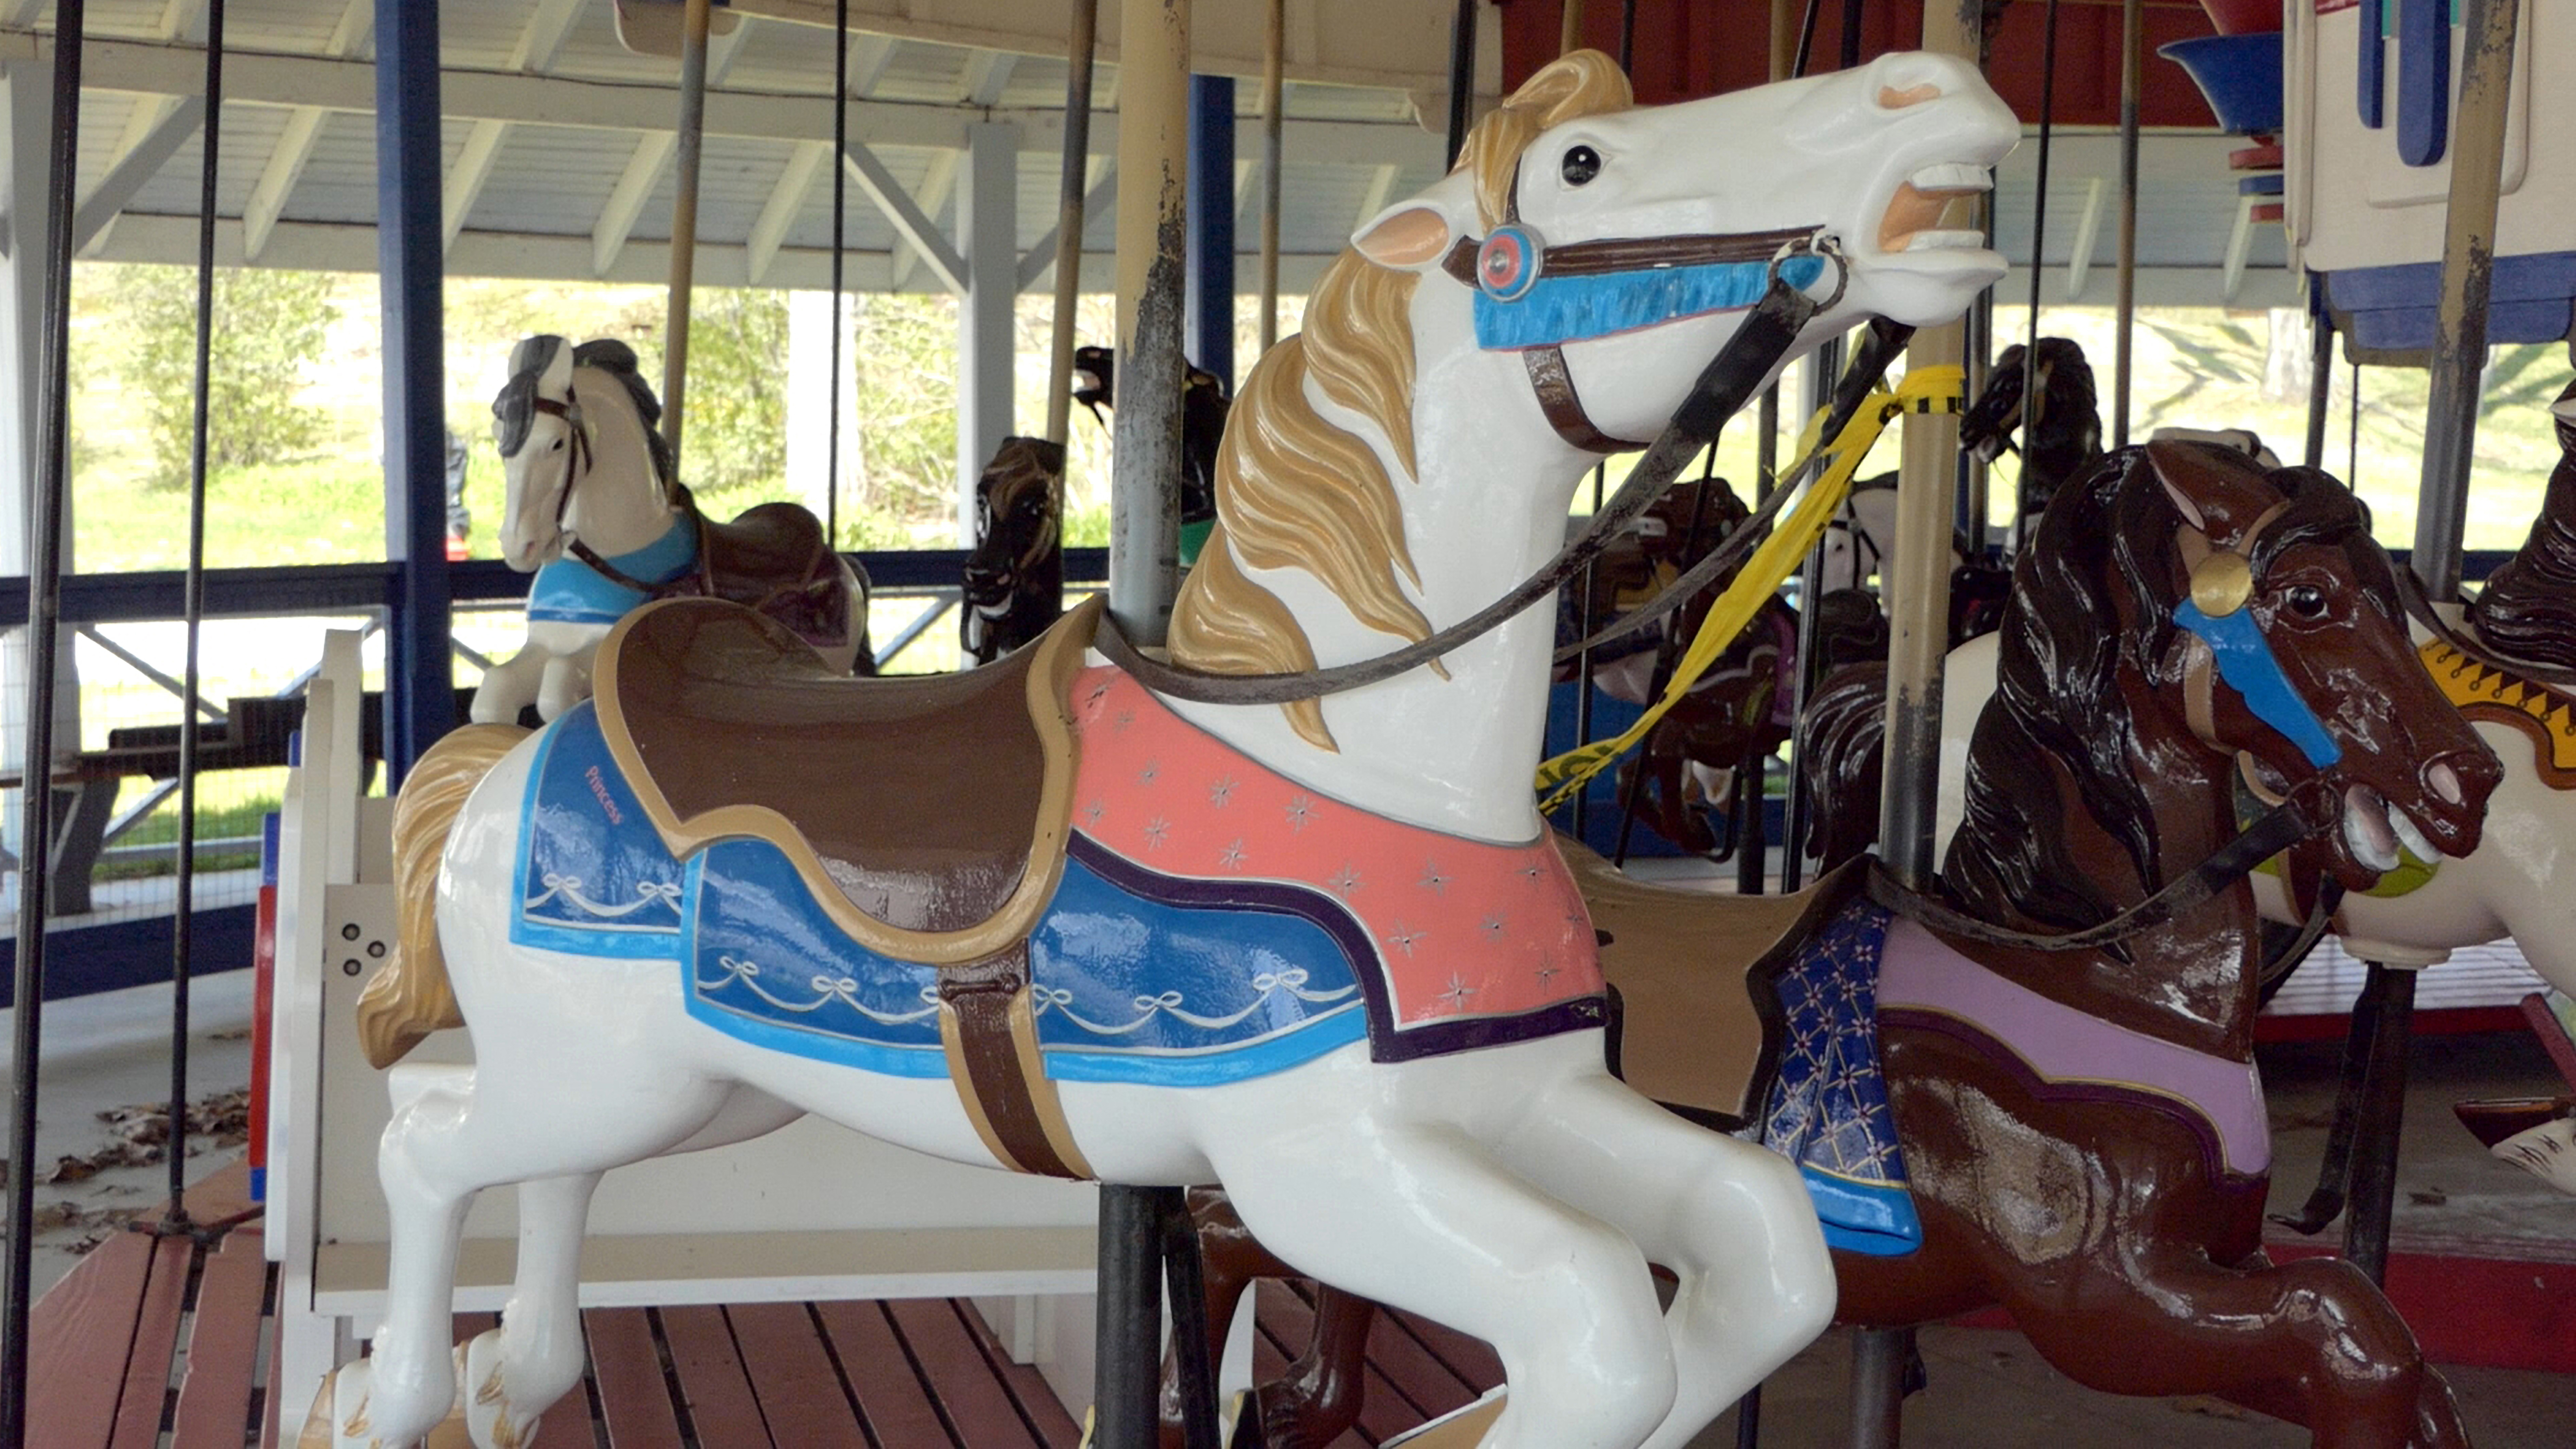 Carousel Horse Ride at Midway Park. Credit: Peter Daulton